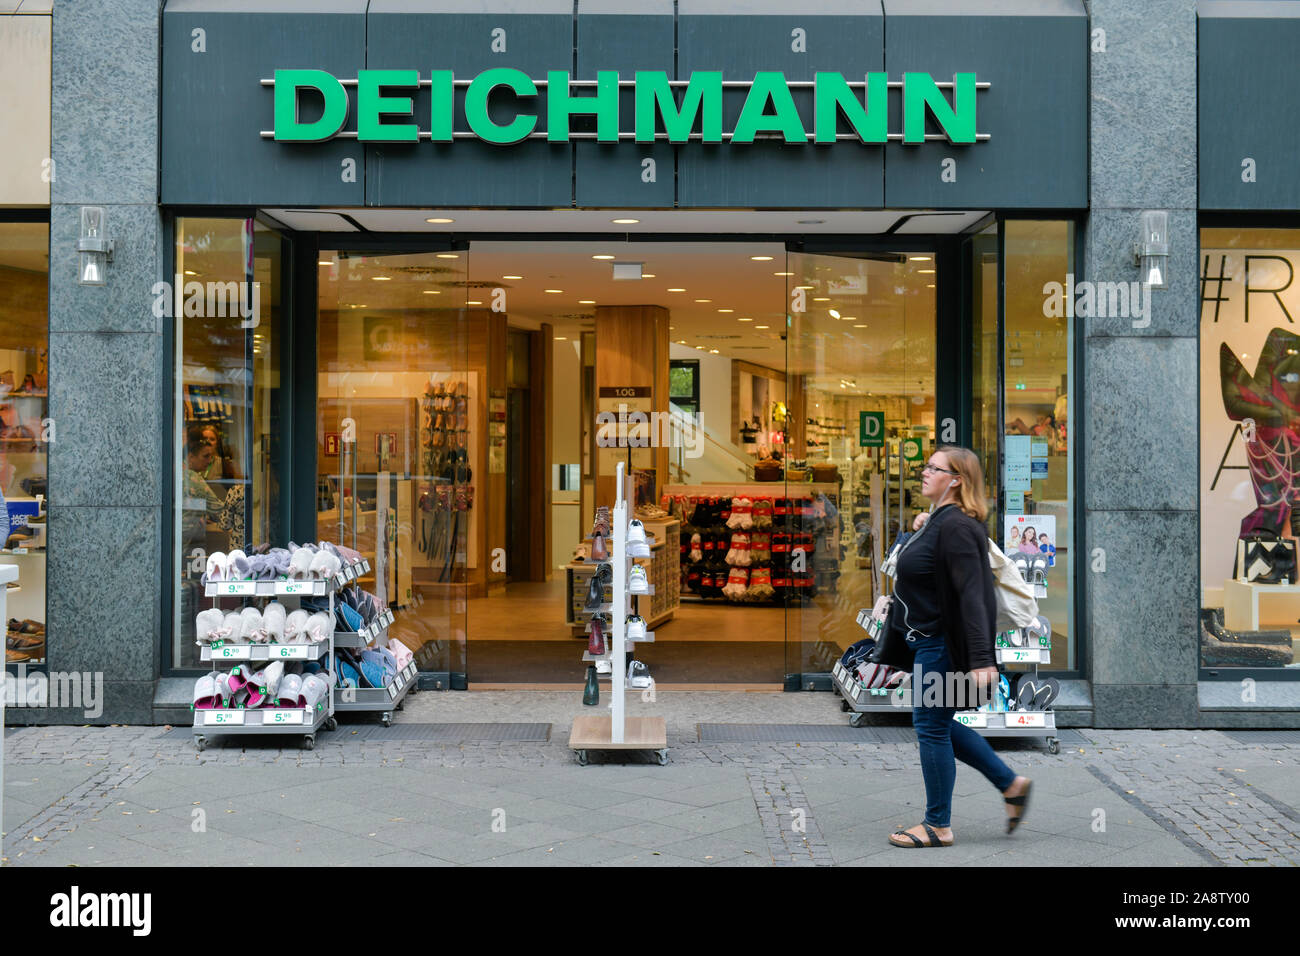 Deichmann High Resolution Photography and - Alamy